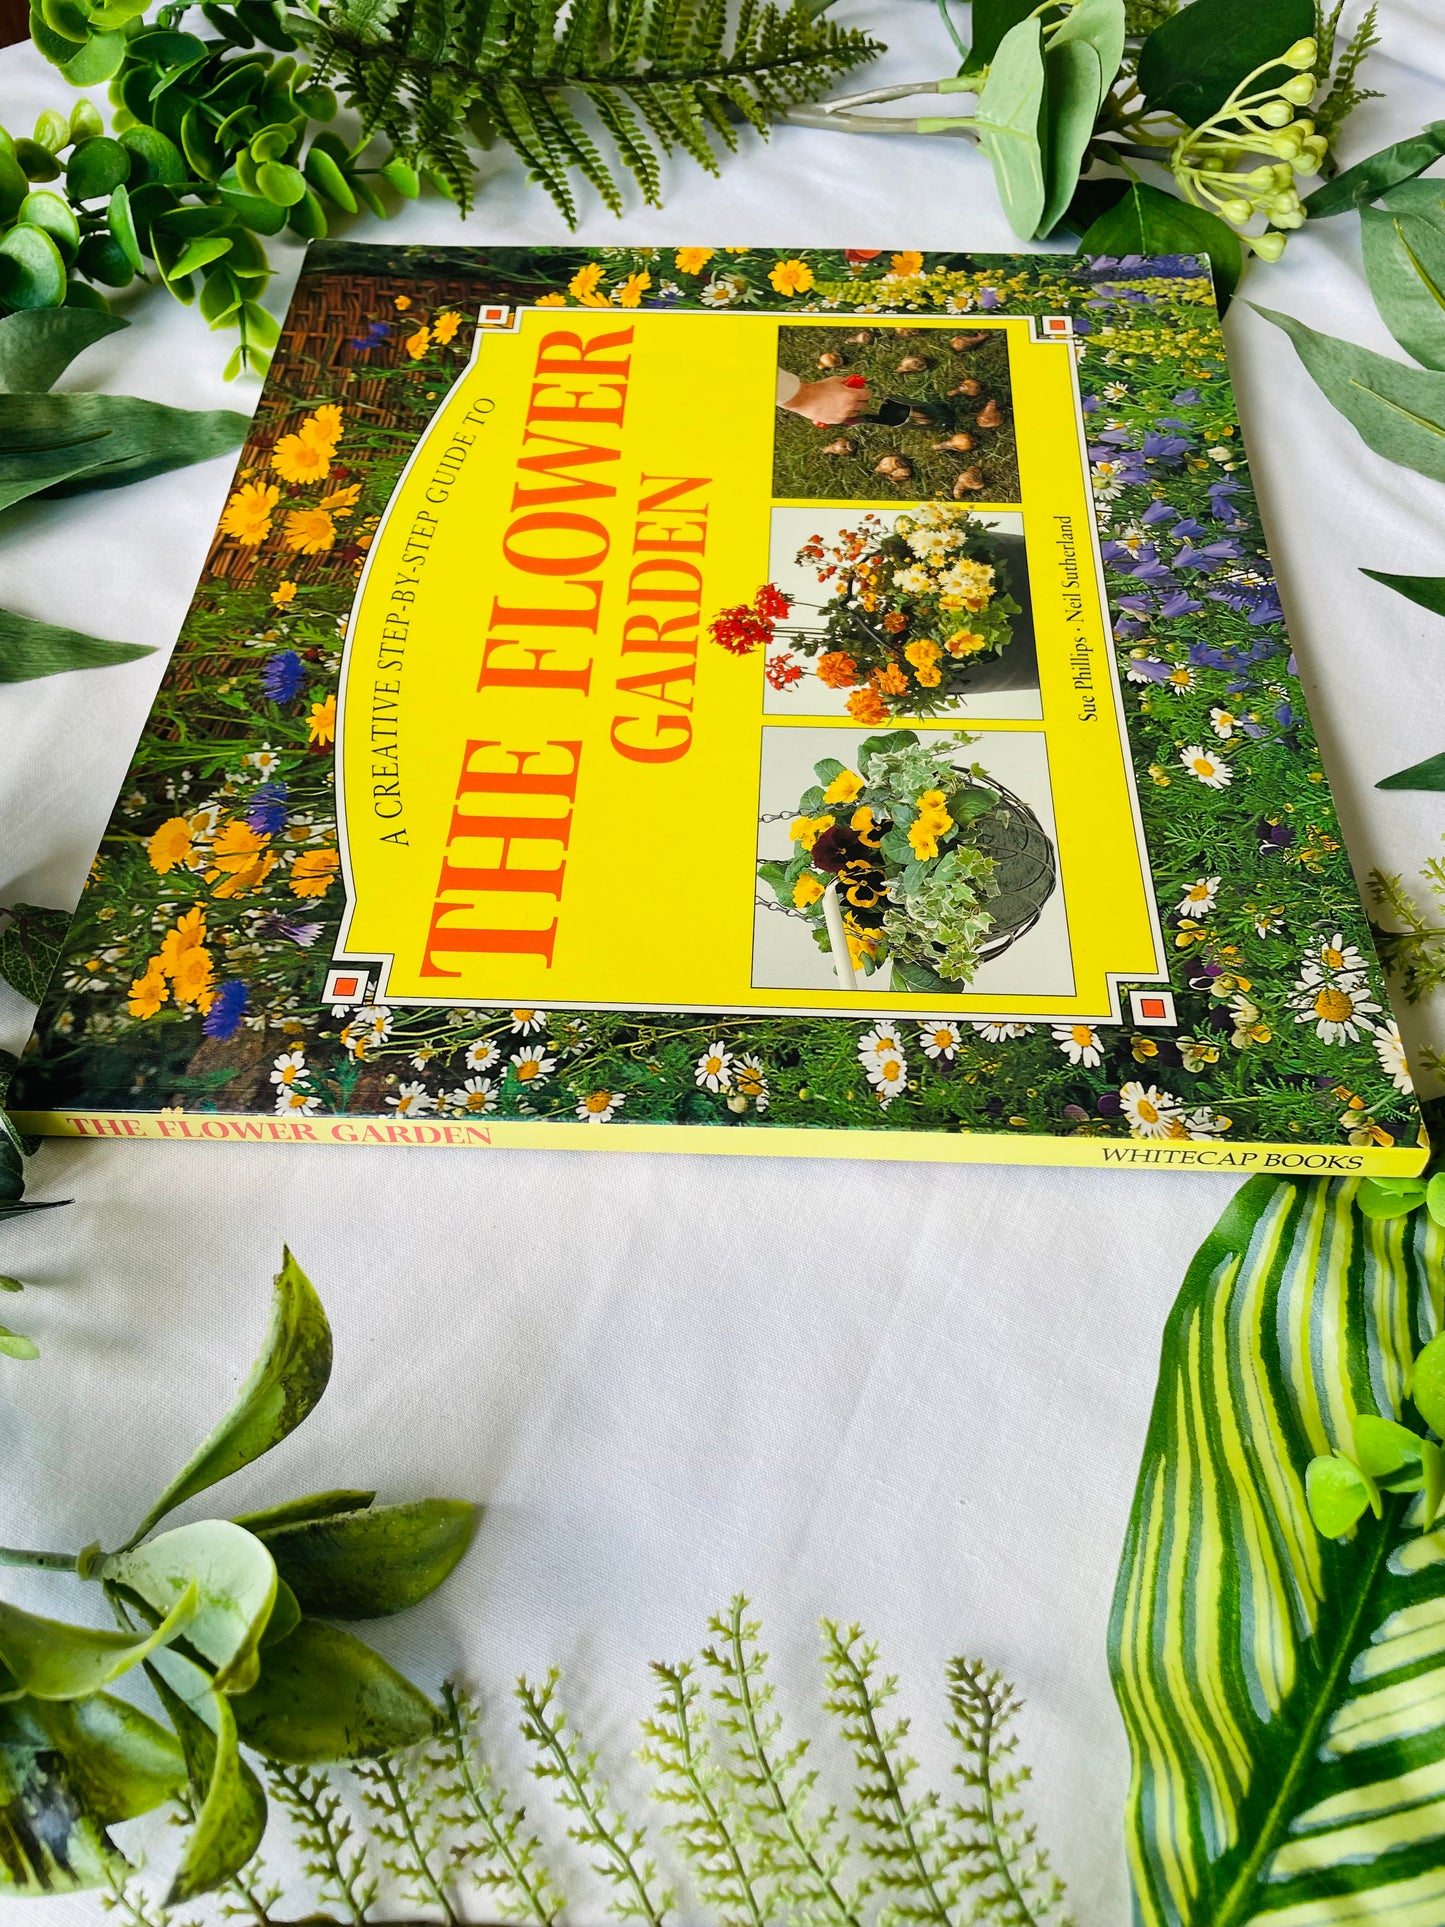 The Flower Garden Book (1995)